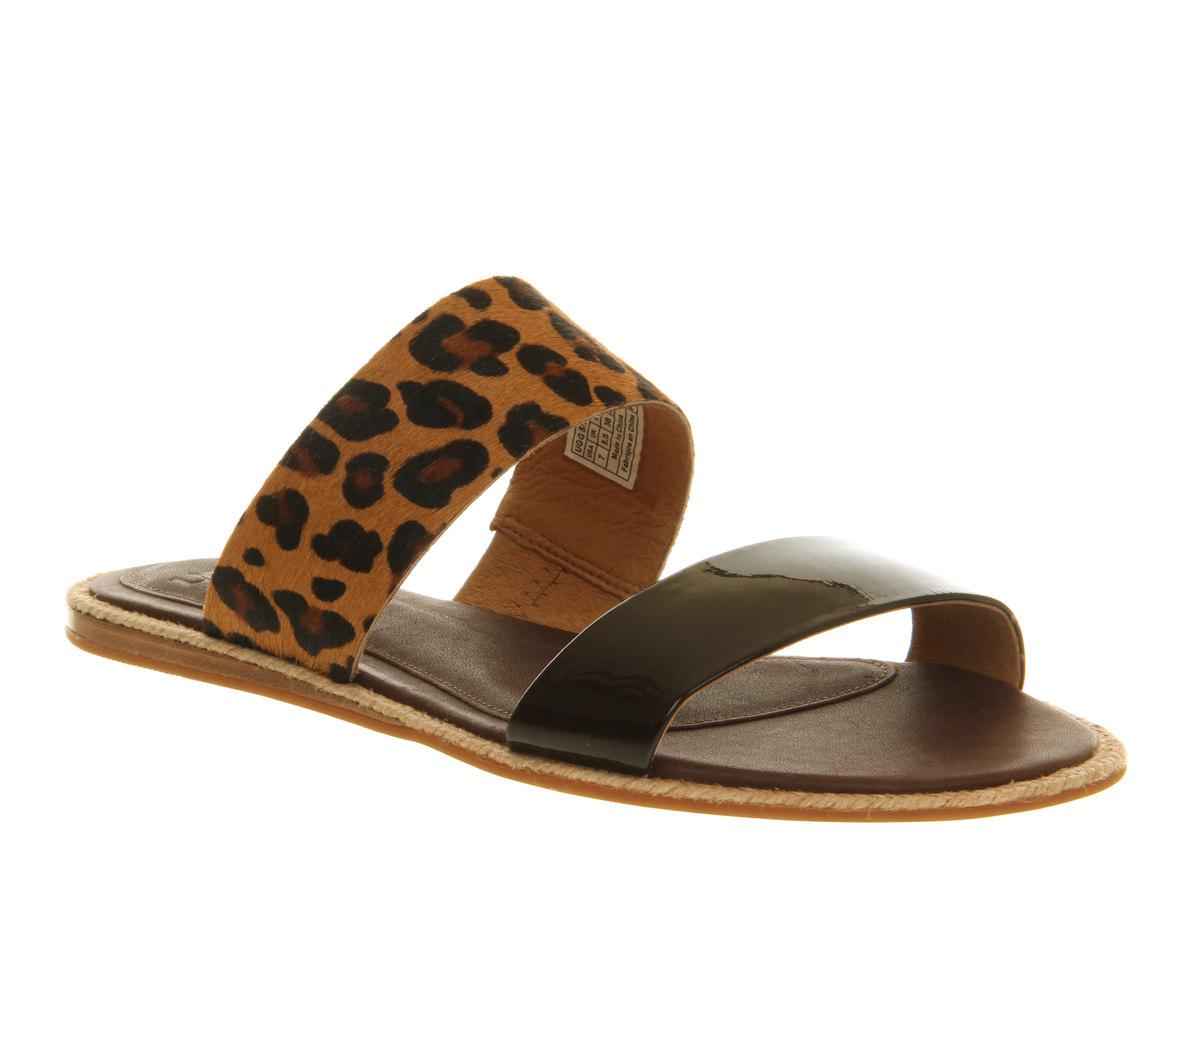 UGG Amalia Leopard Sandal in Brown - Lyst